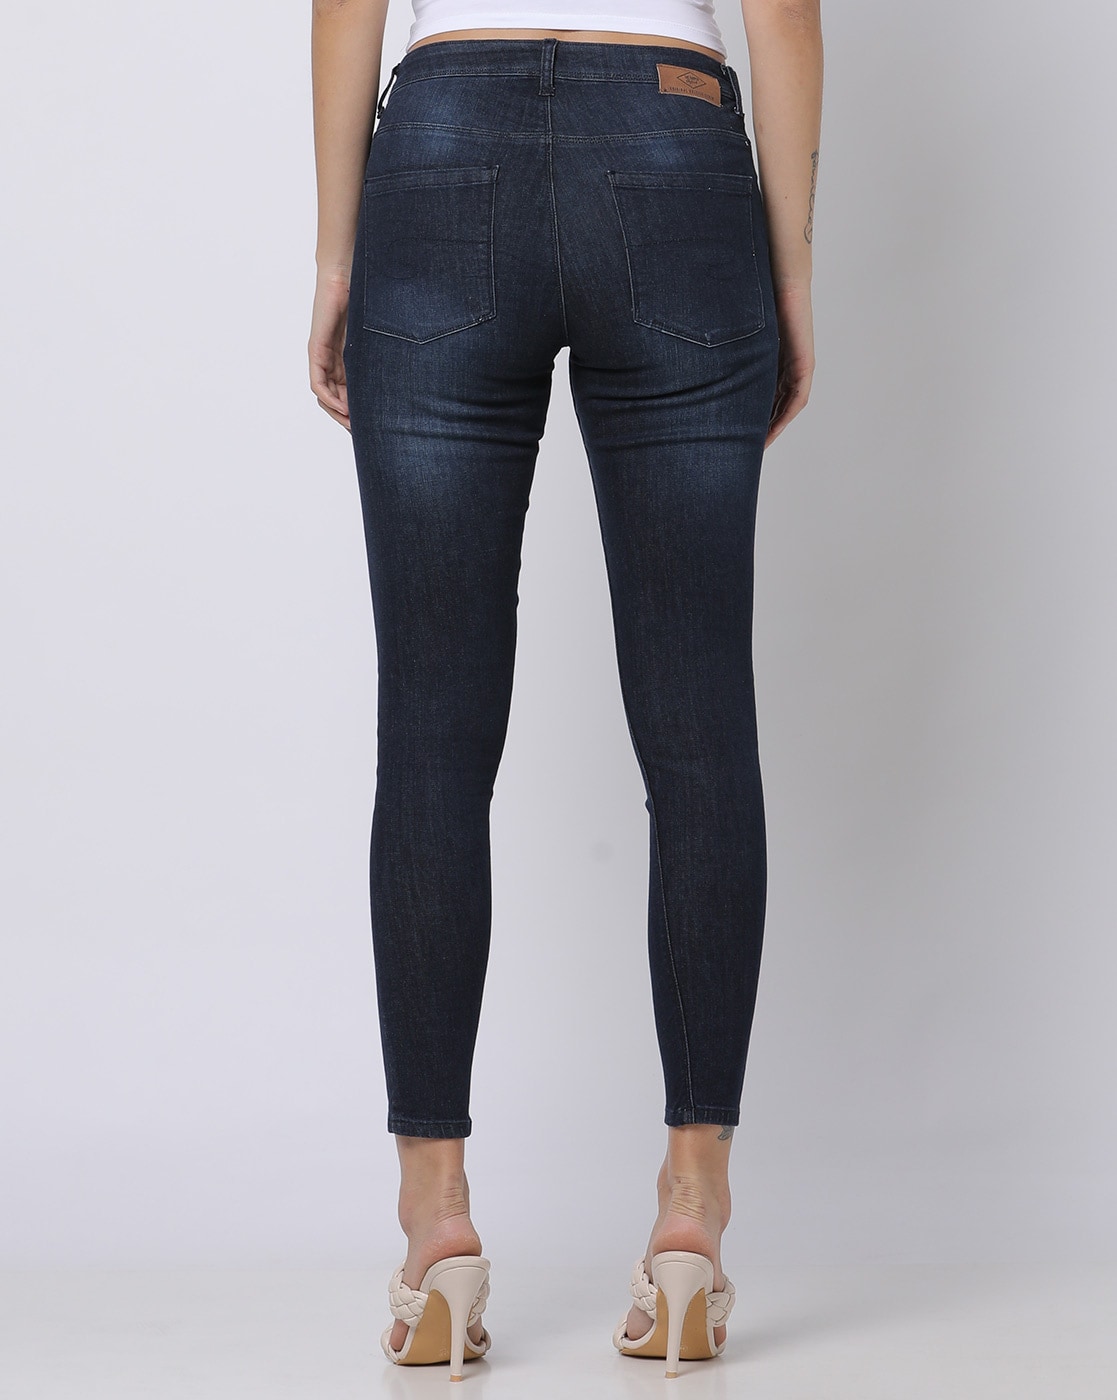 Lee Cooper Women's Indigo Slim Fit Jeans at Rs 1299/piece